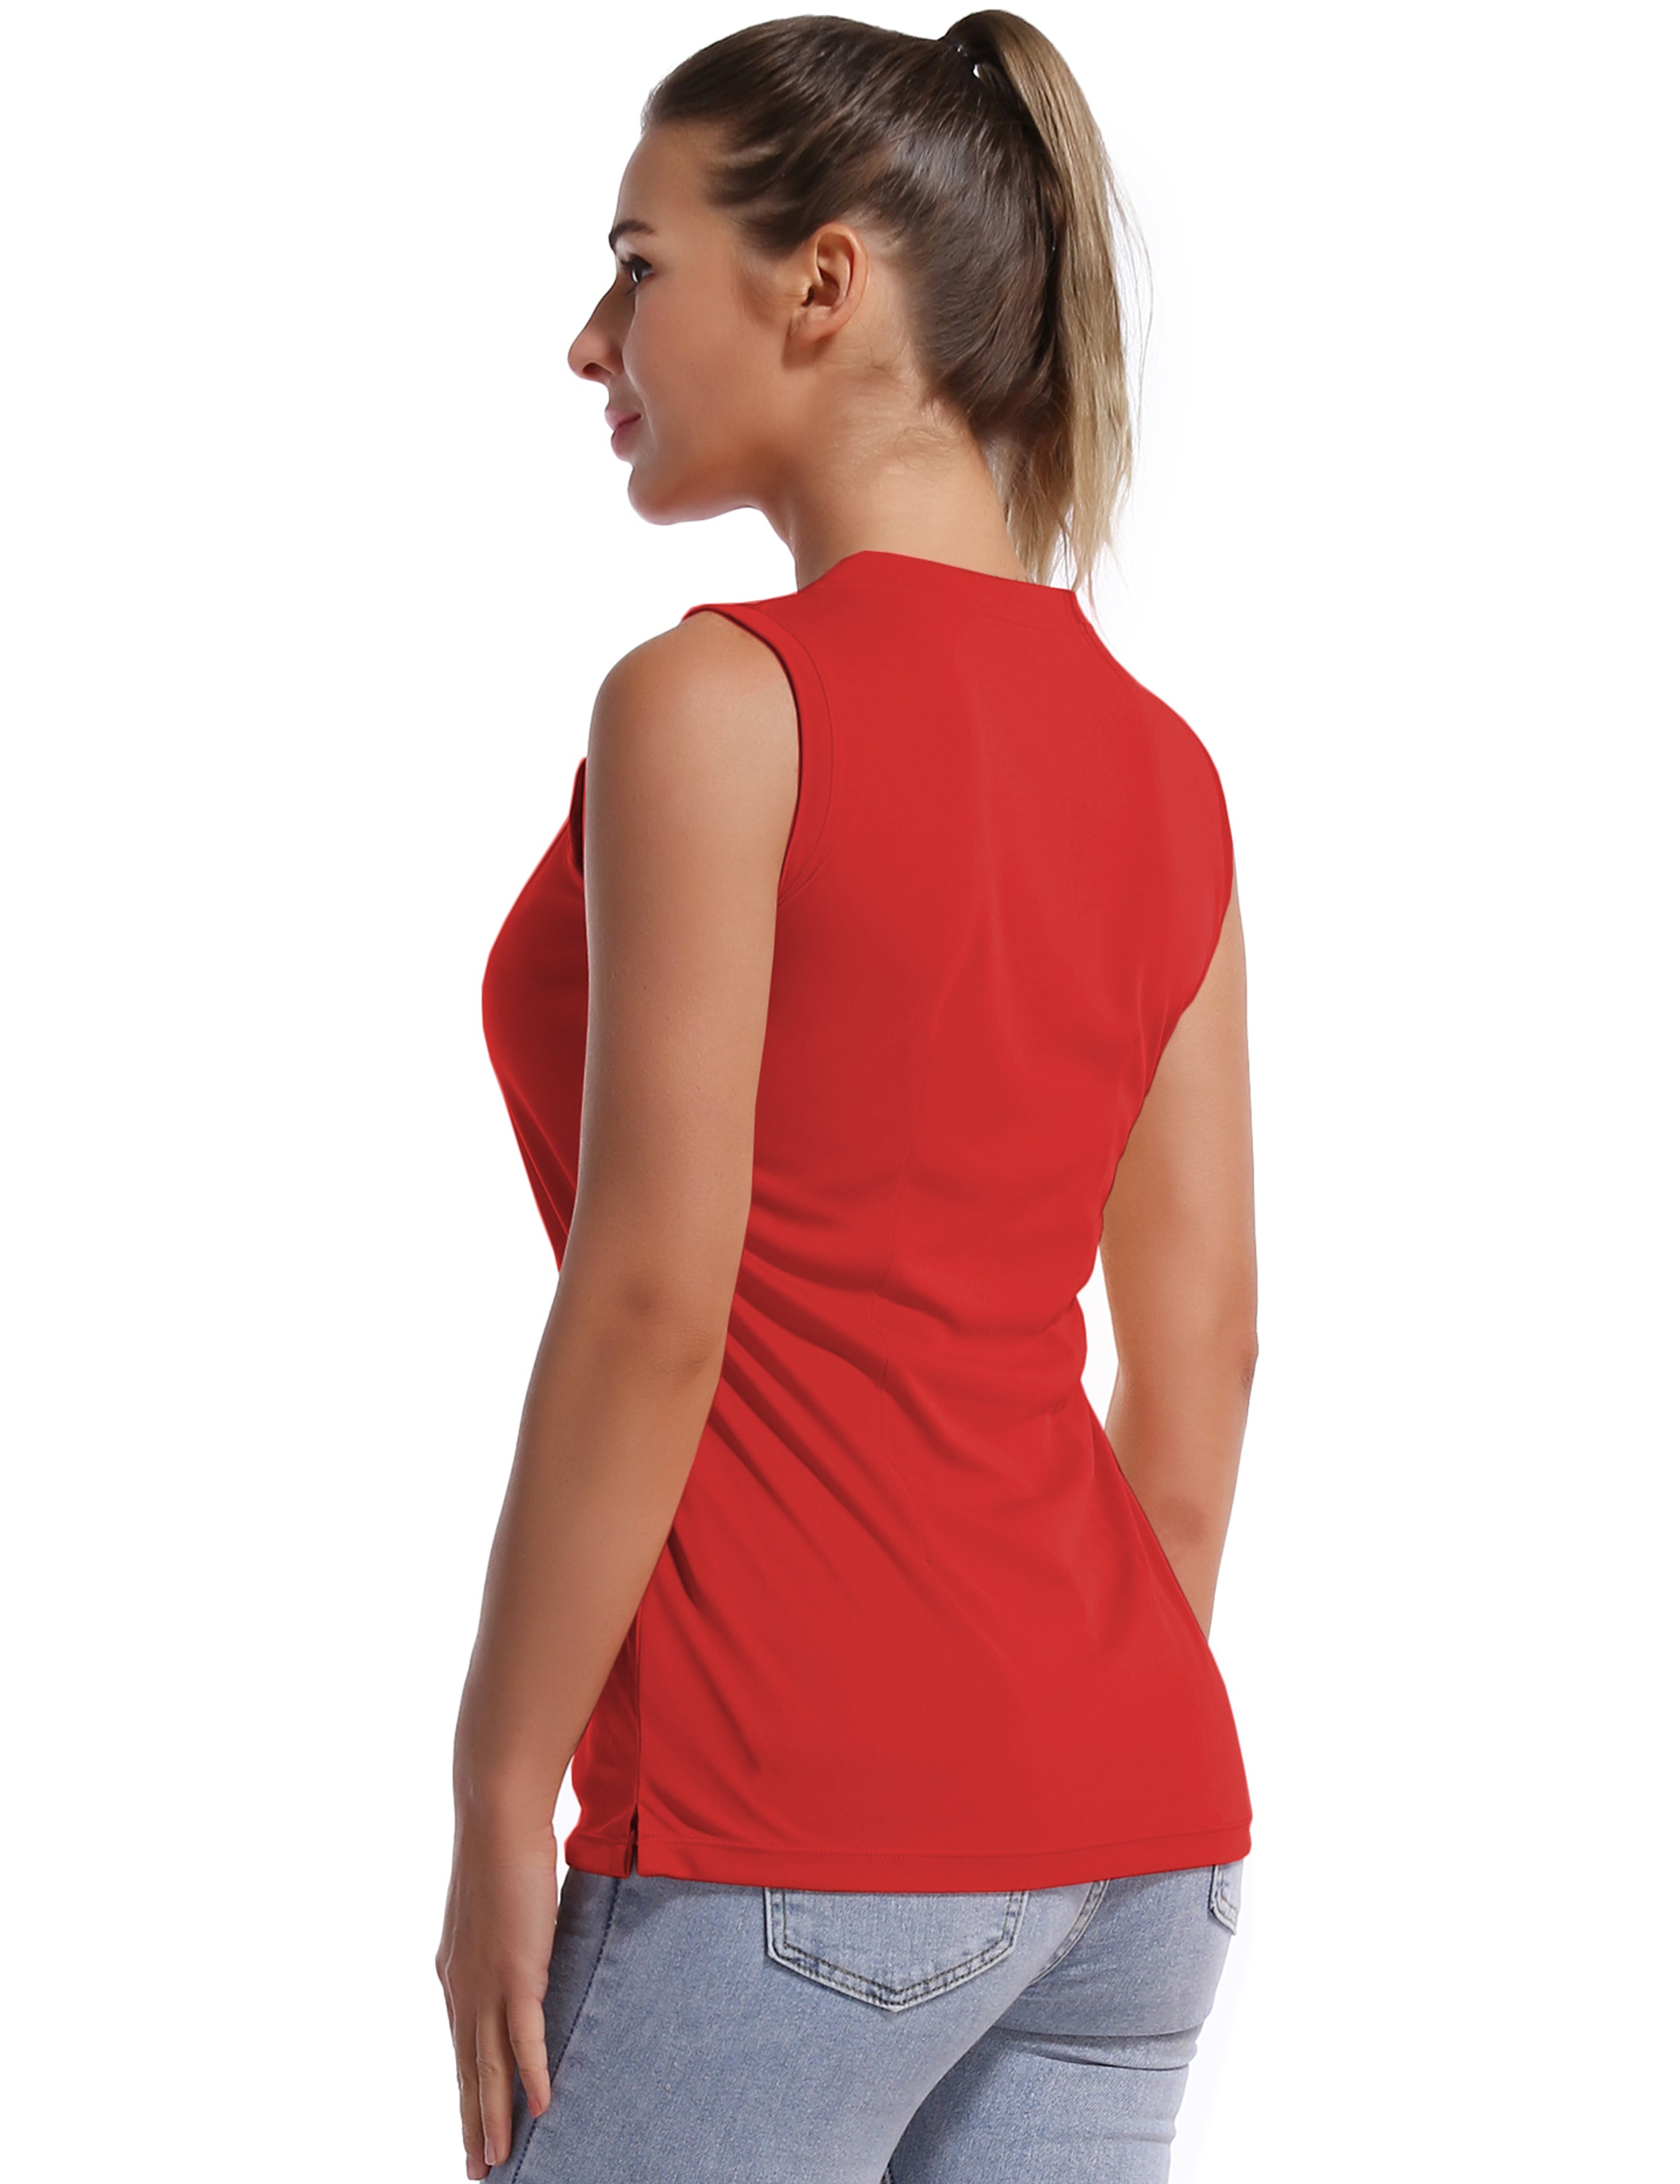 V Neck Sleeveless Athletic Shirts red